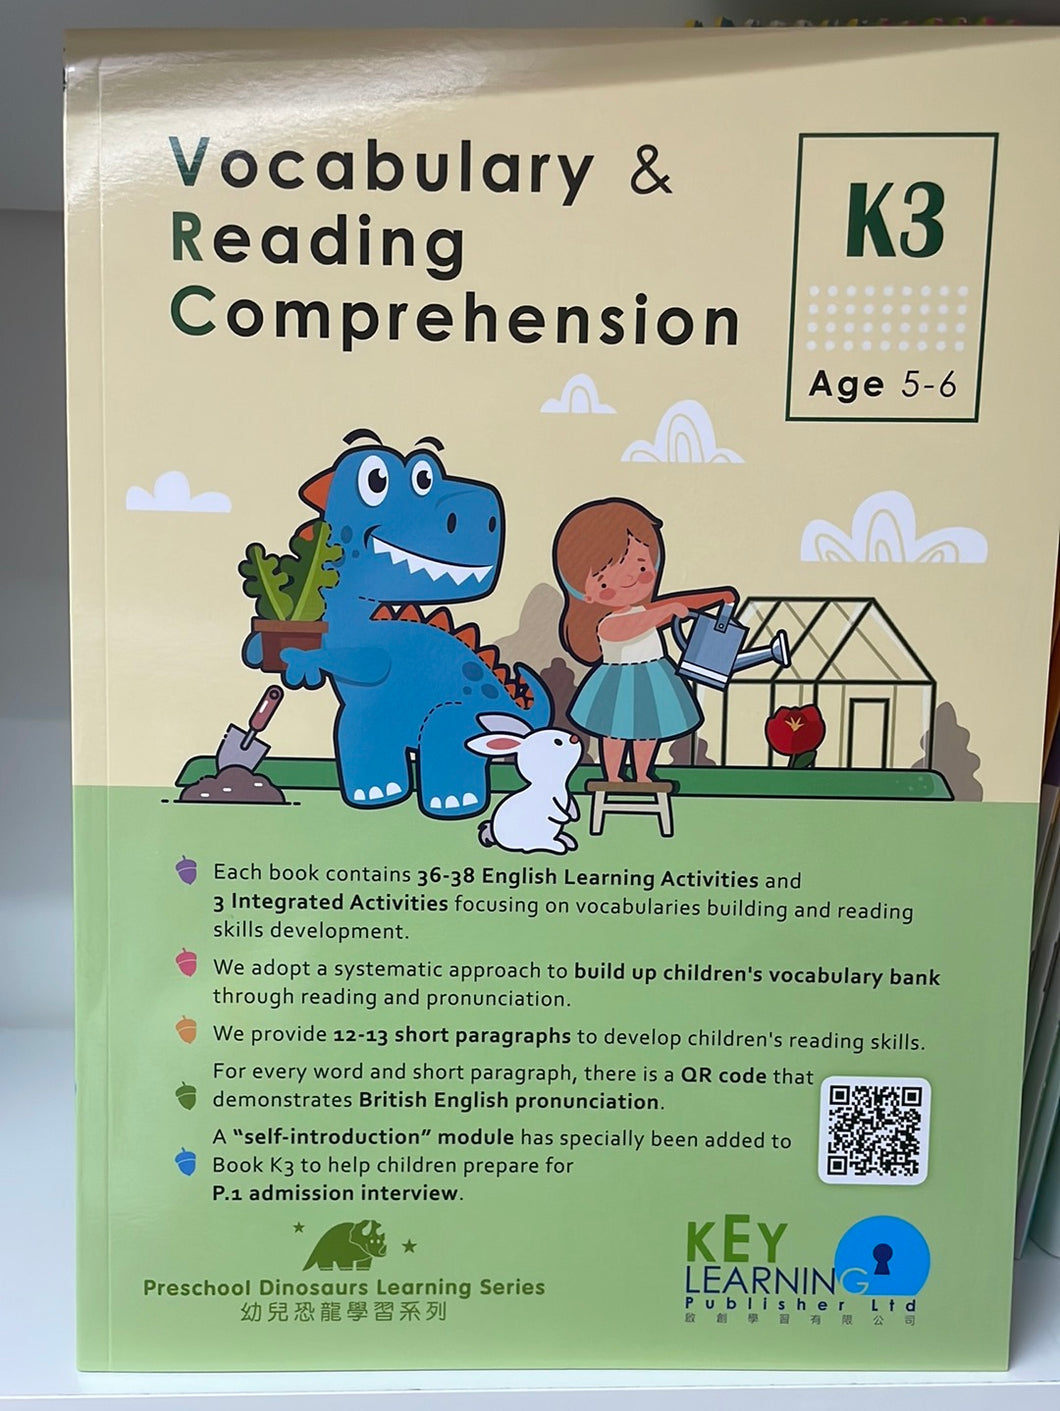 KL Vocabulary & Reading Comprehension K3